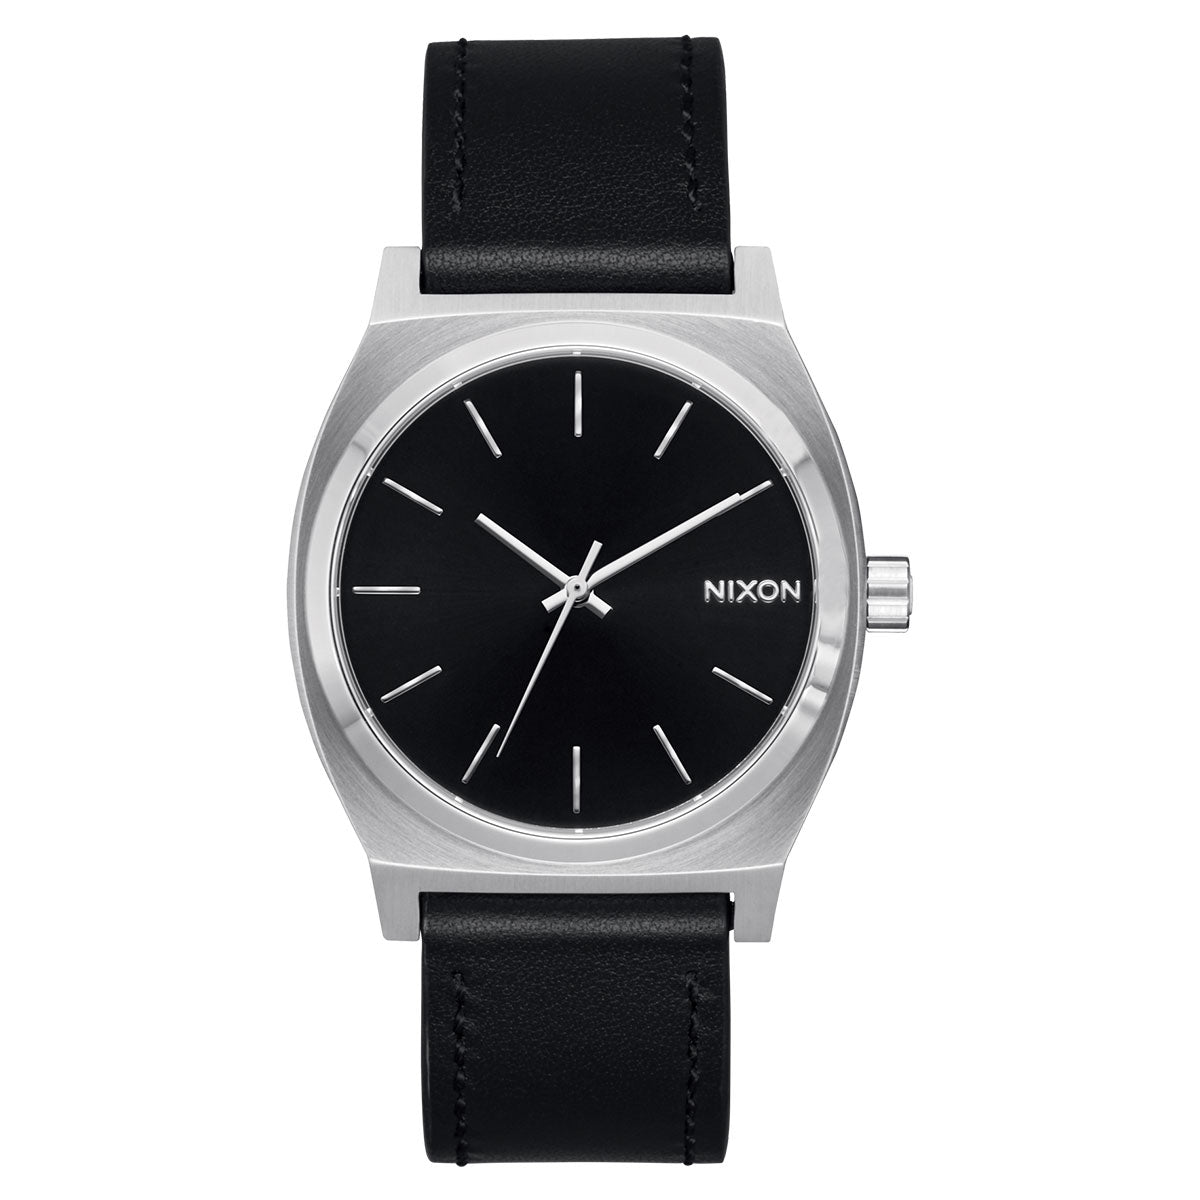 Nixon Time Teller Watch - Silver/Black image 1